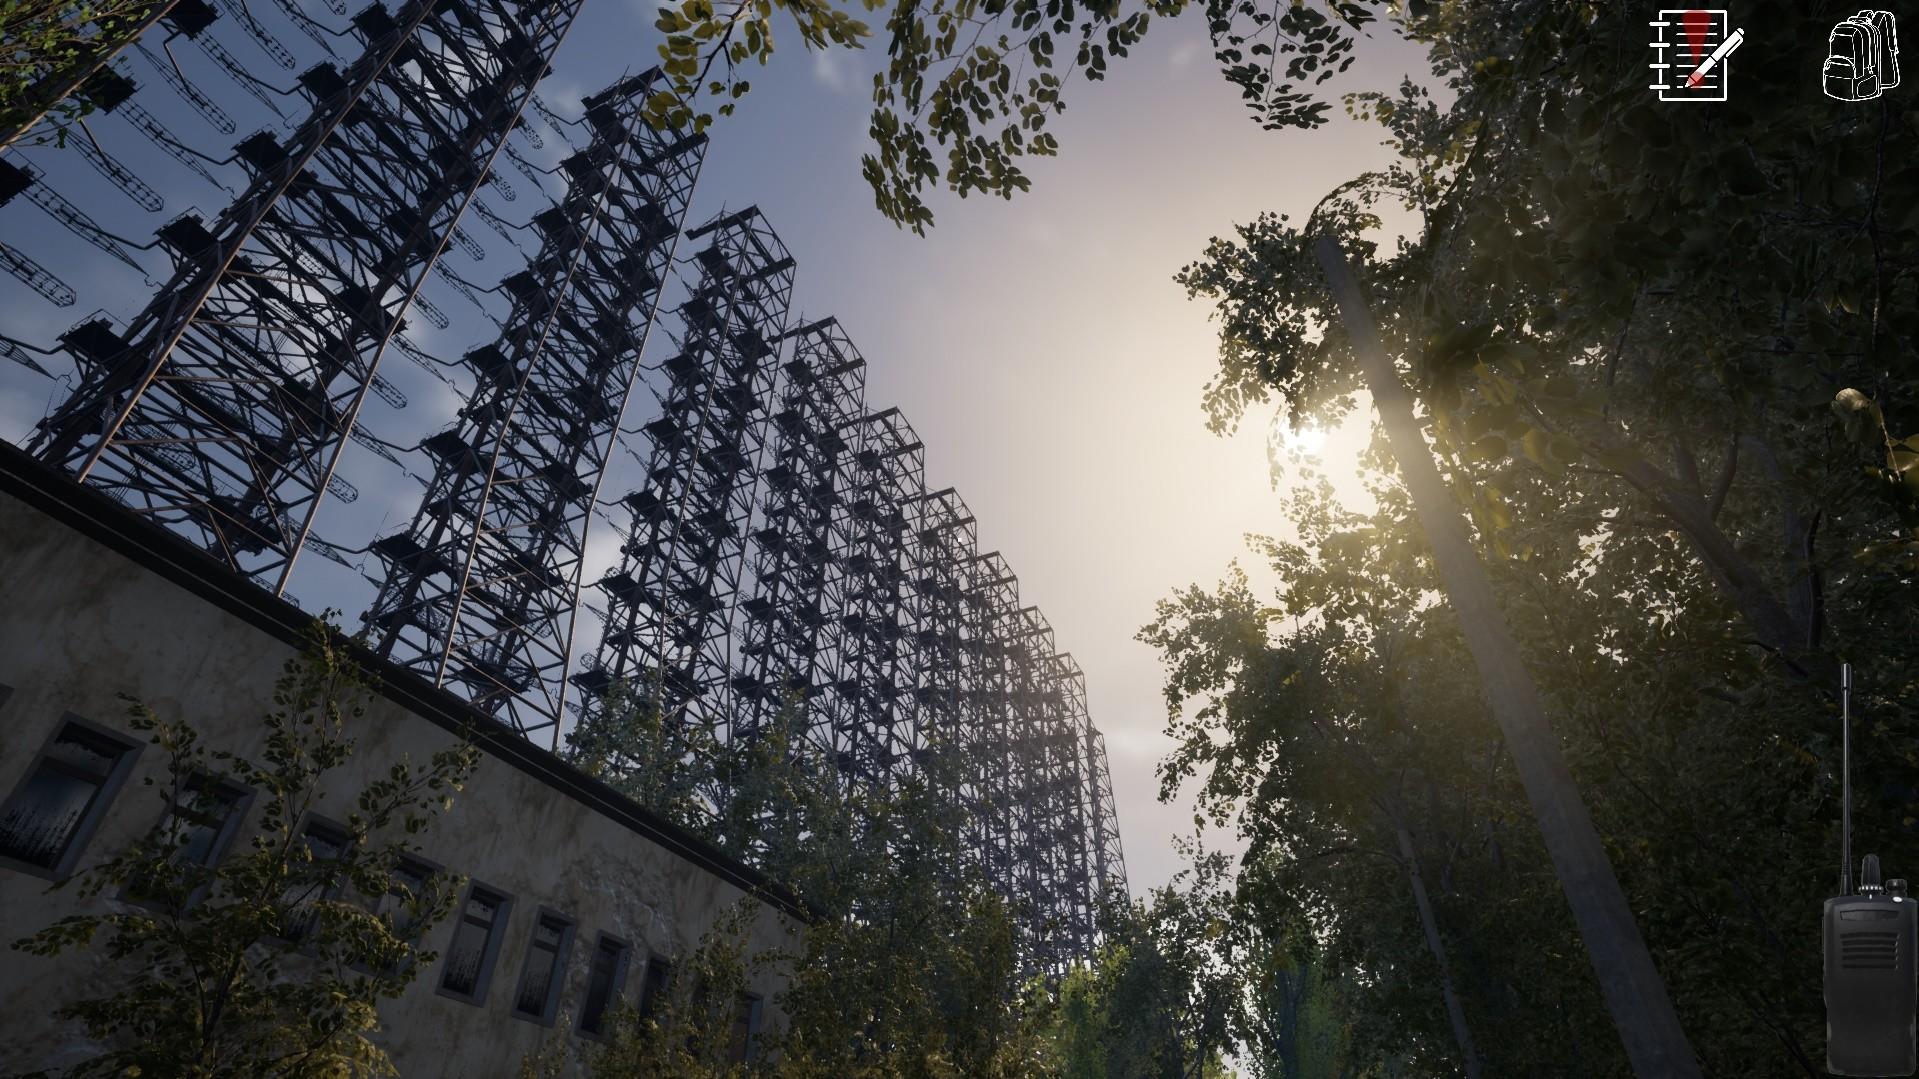 Frequency: Chernobyl screenshot game